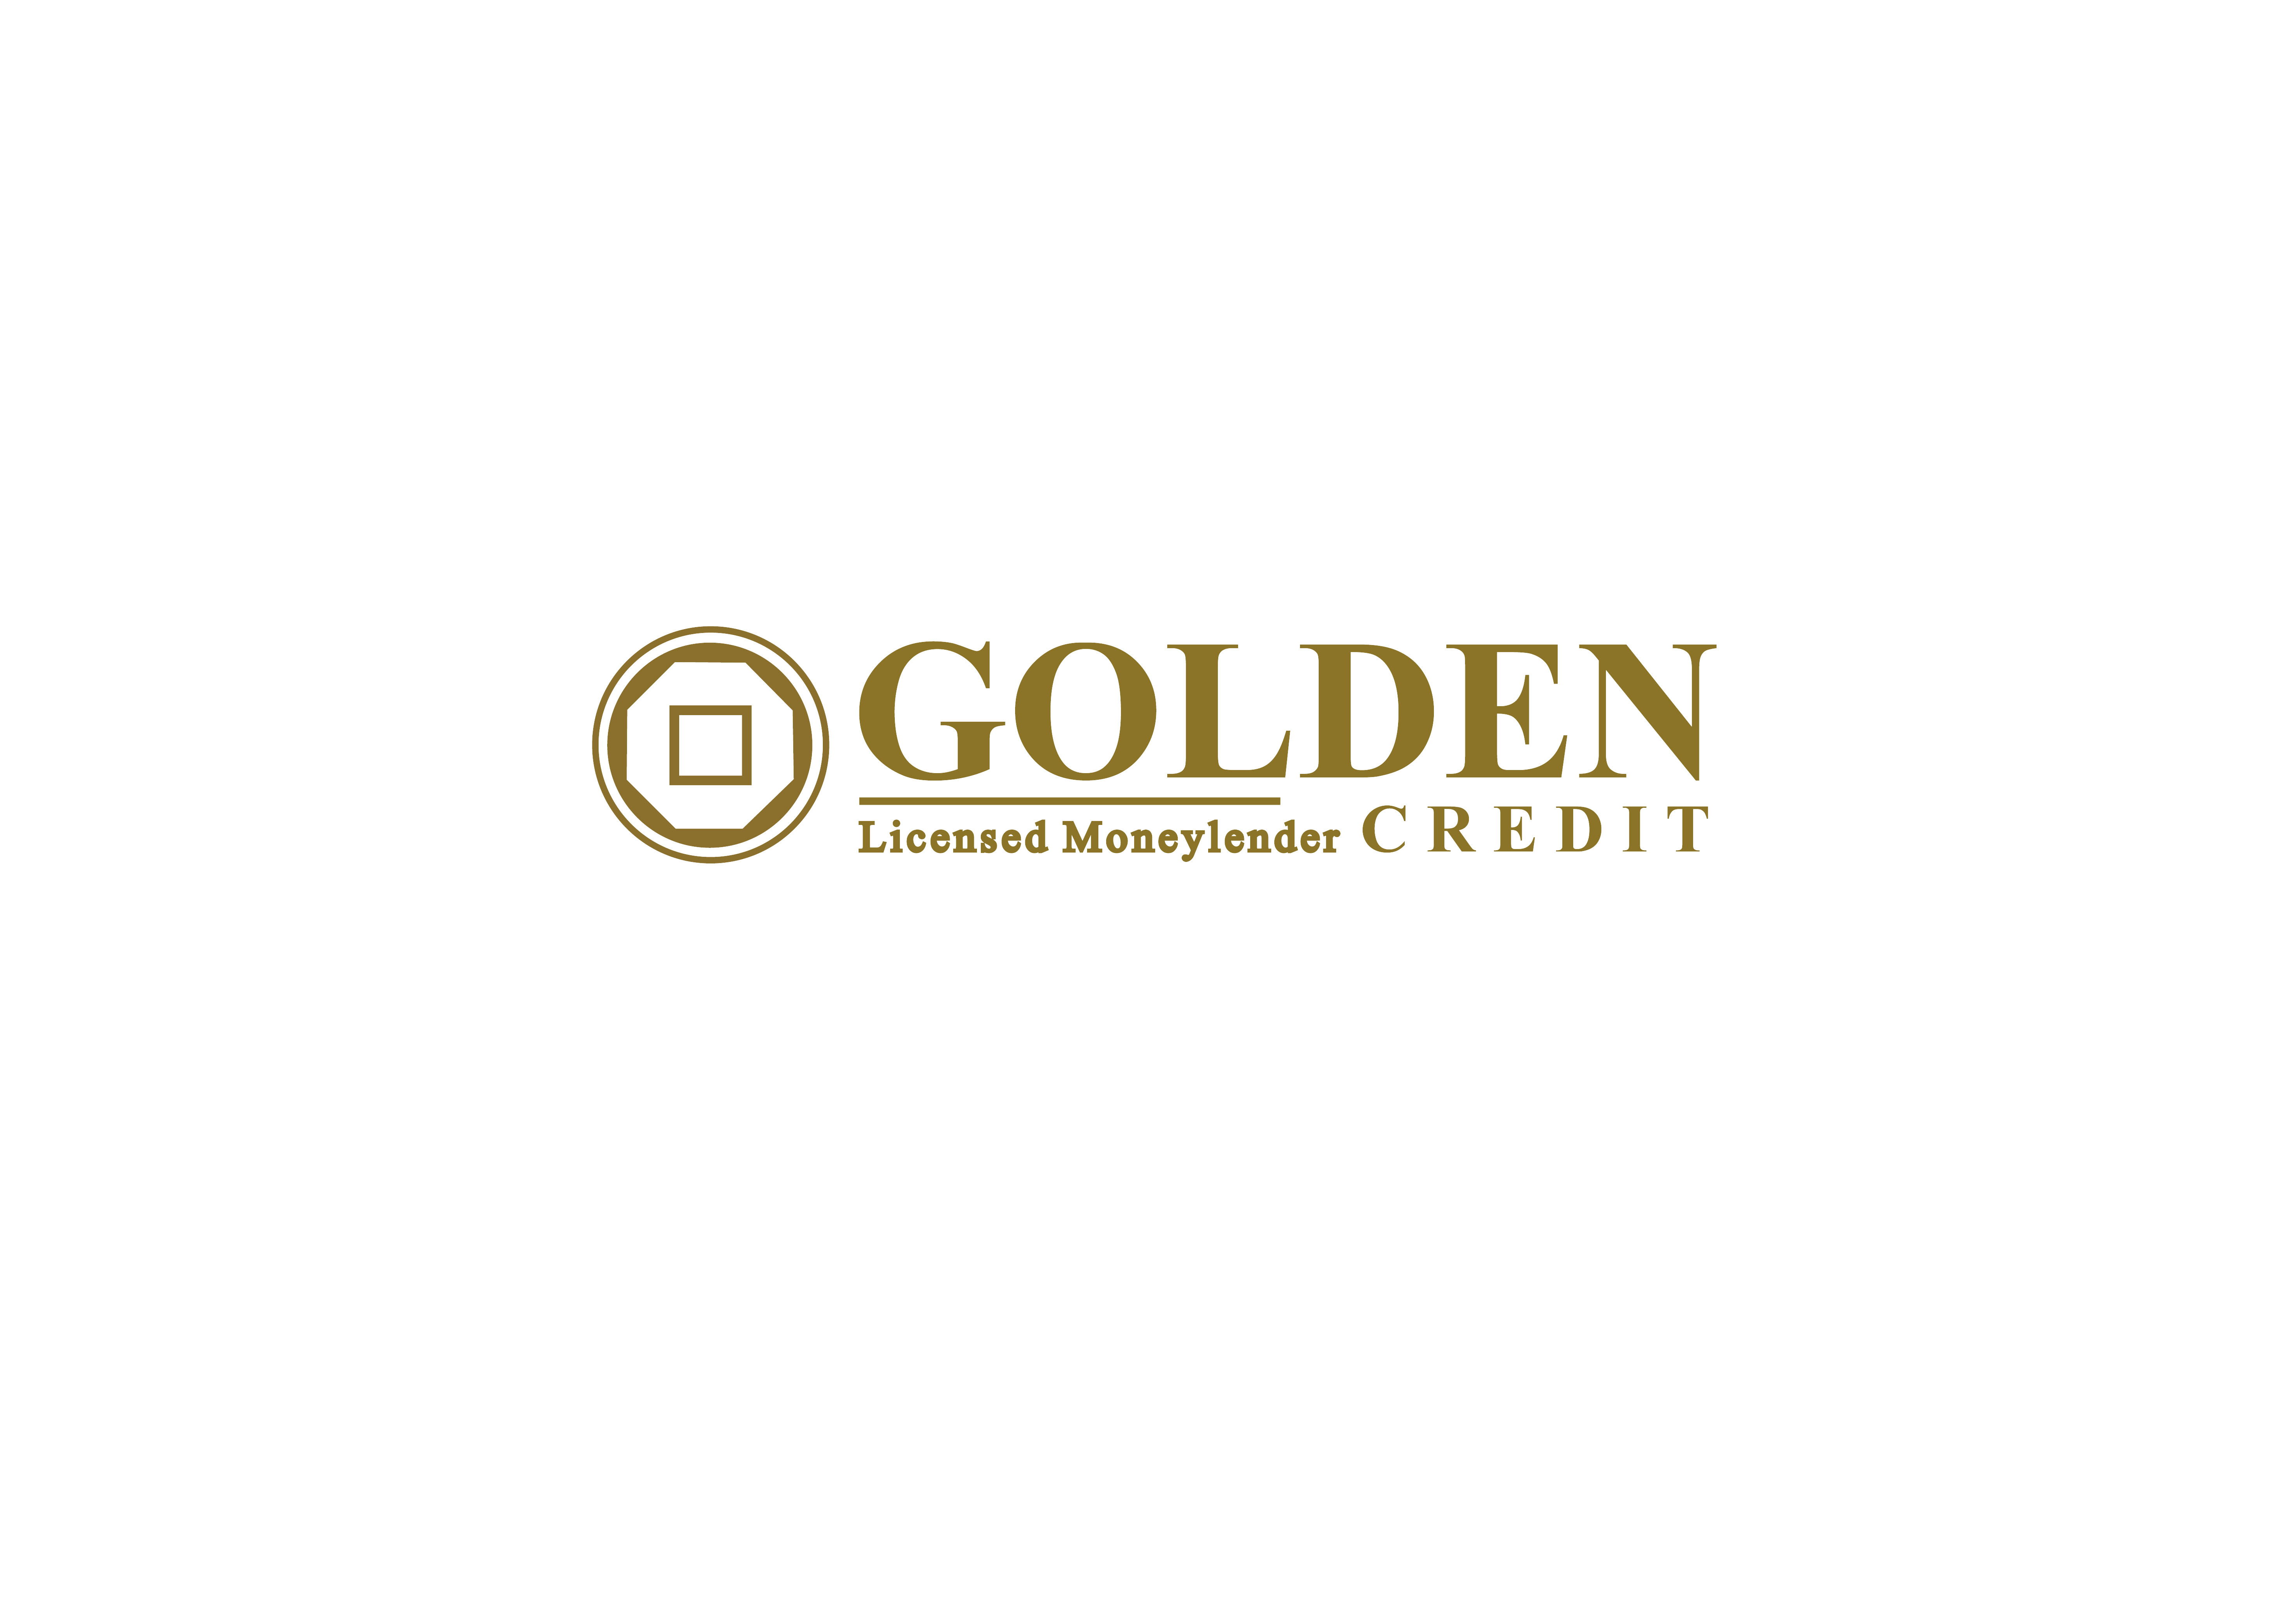 Golden Credit